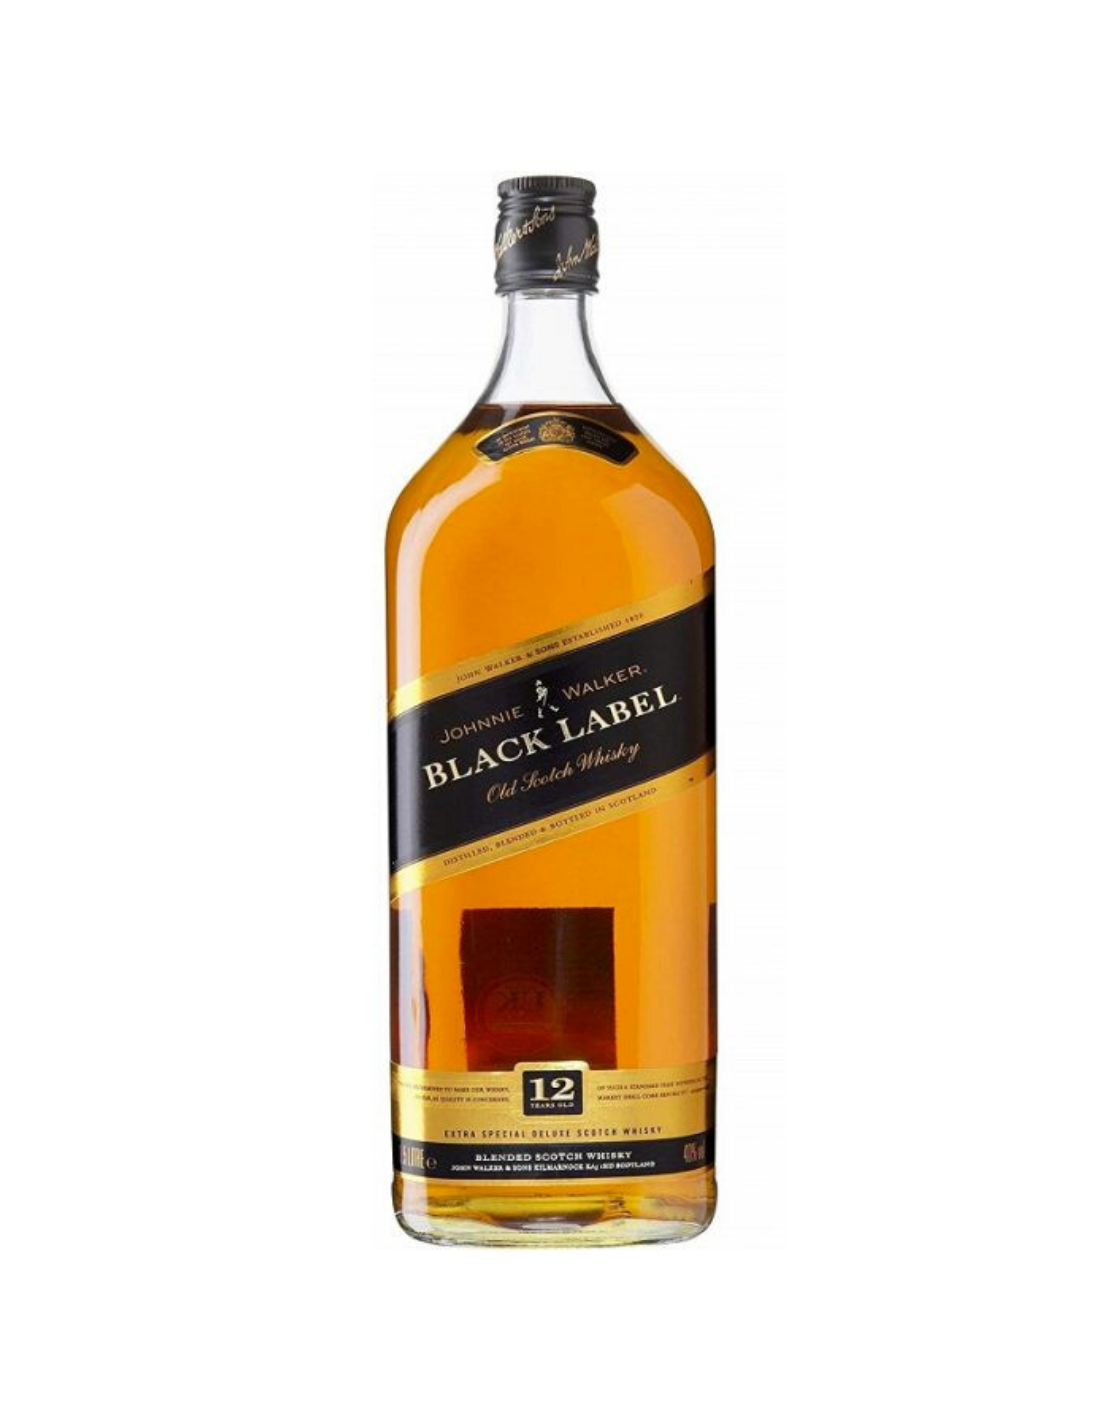 Whisky Johnnie Walker Black Label, 3L, 12 ani, 40% alc., Scotia alcooldiscount.ro